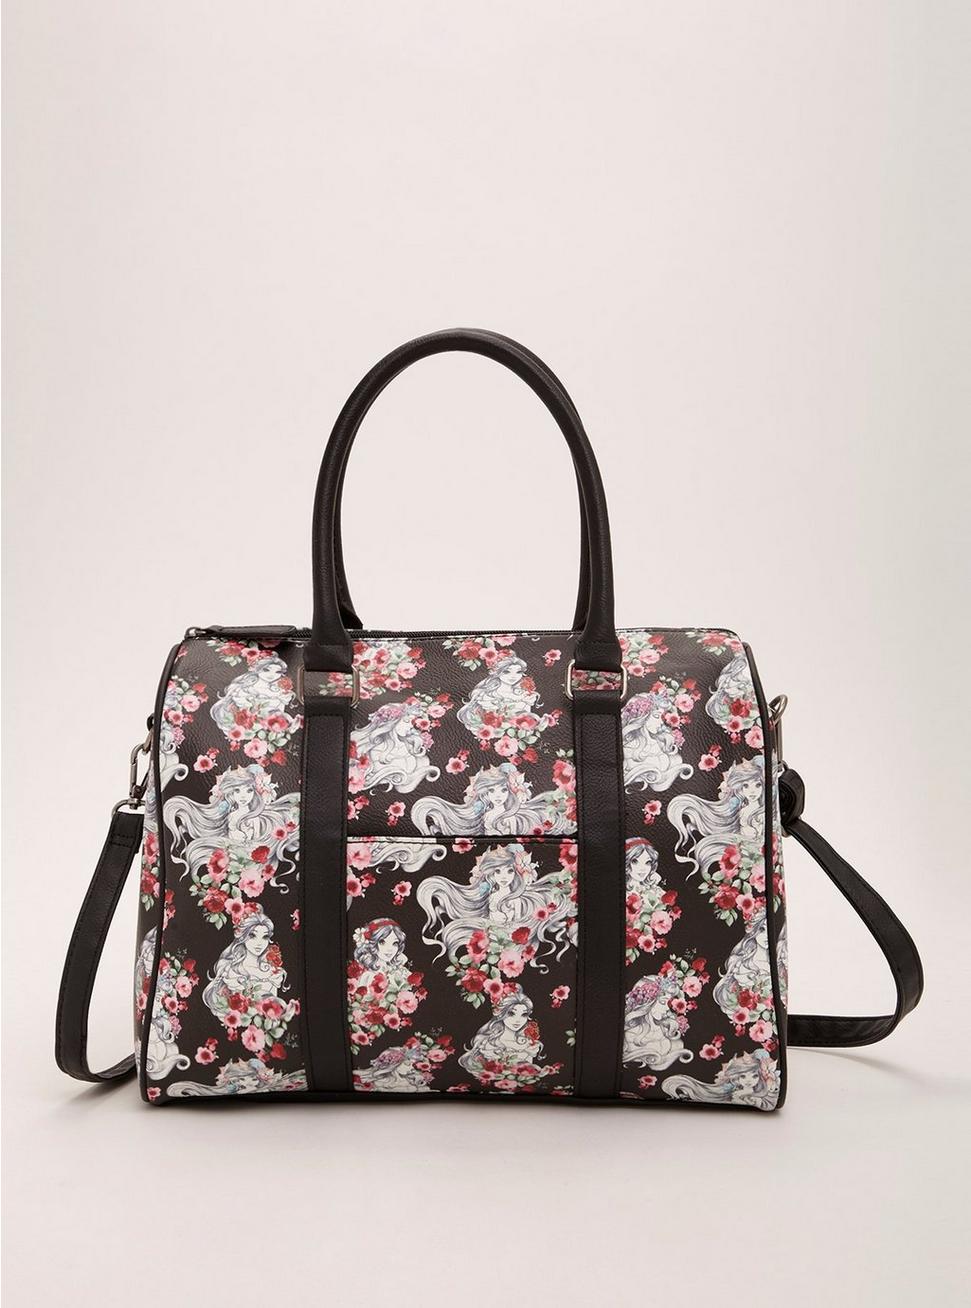 Plus Size - Disney Floral Princess Handbag - Torrid